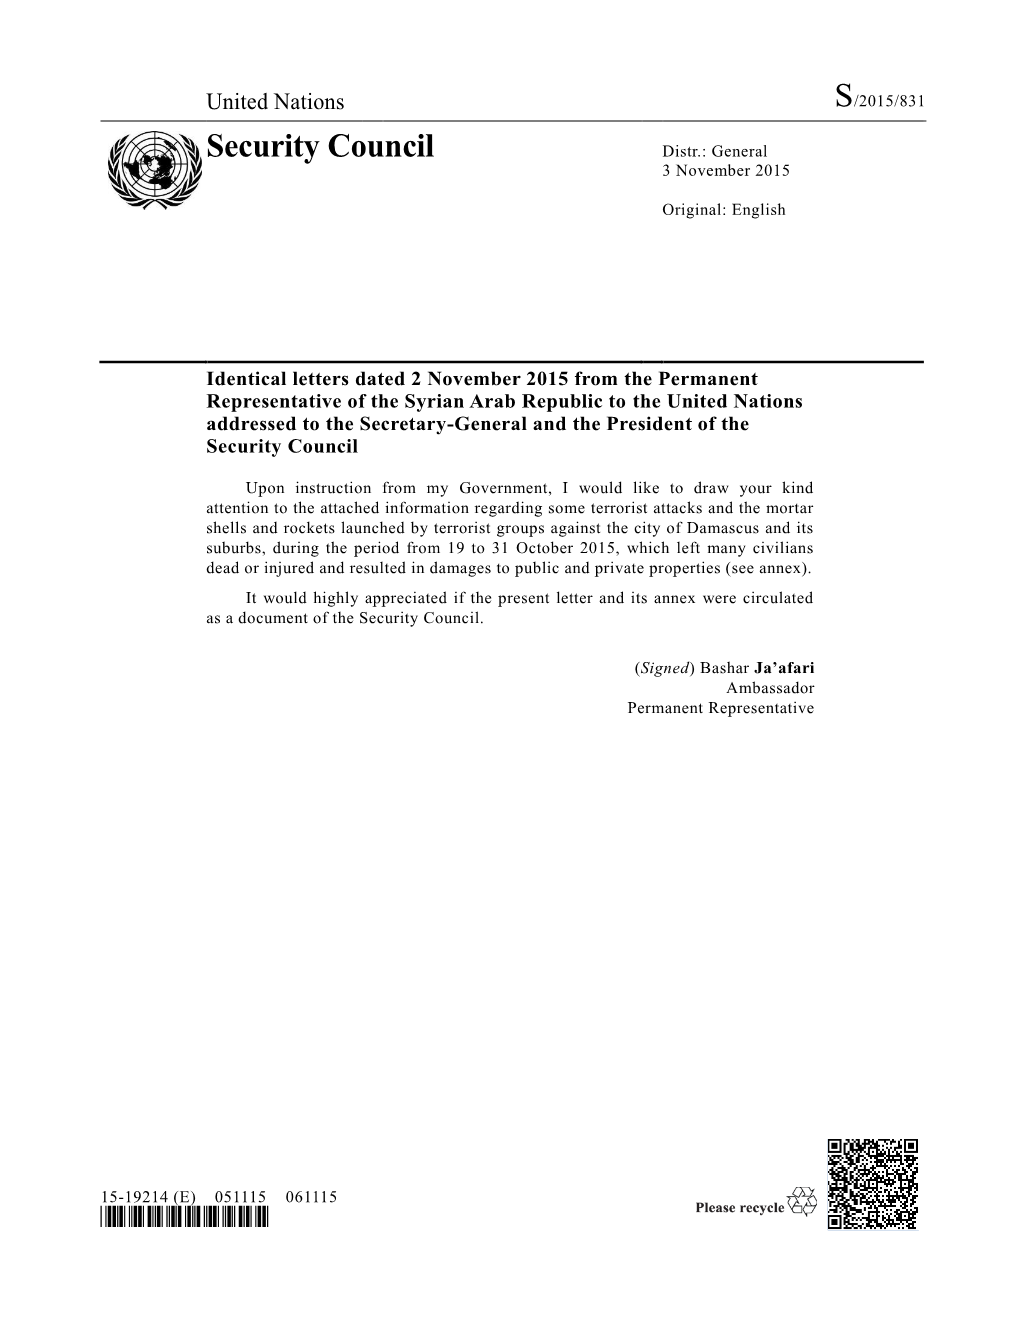 Security Council Distr.: General 3 November 2015